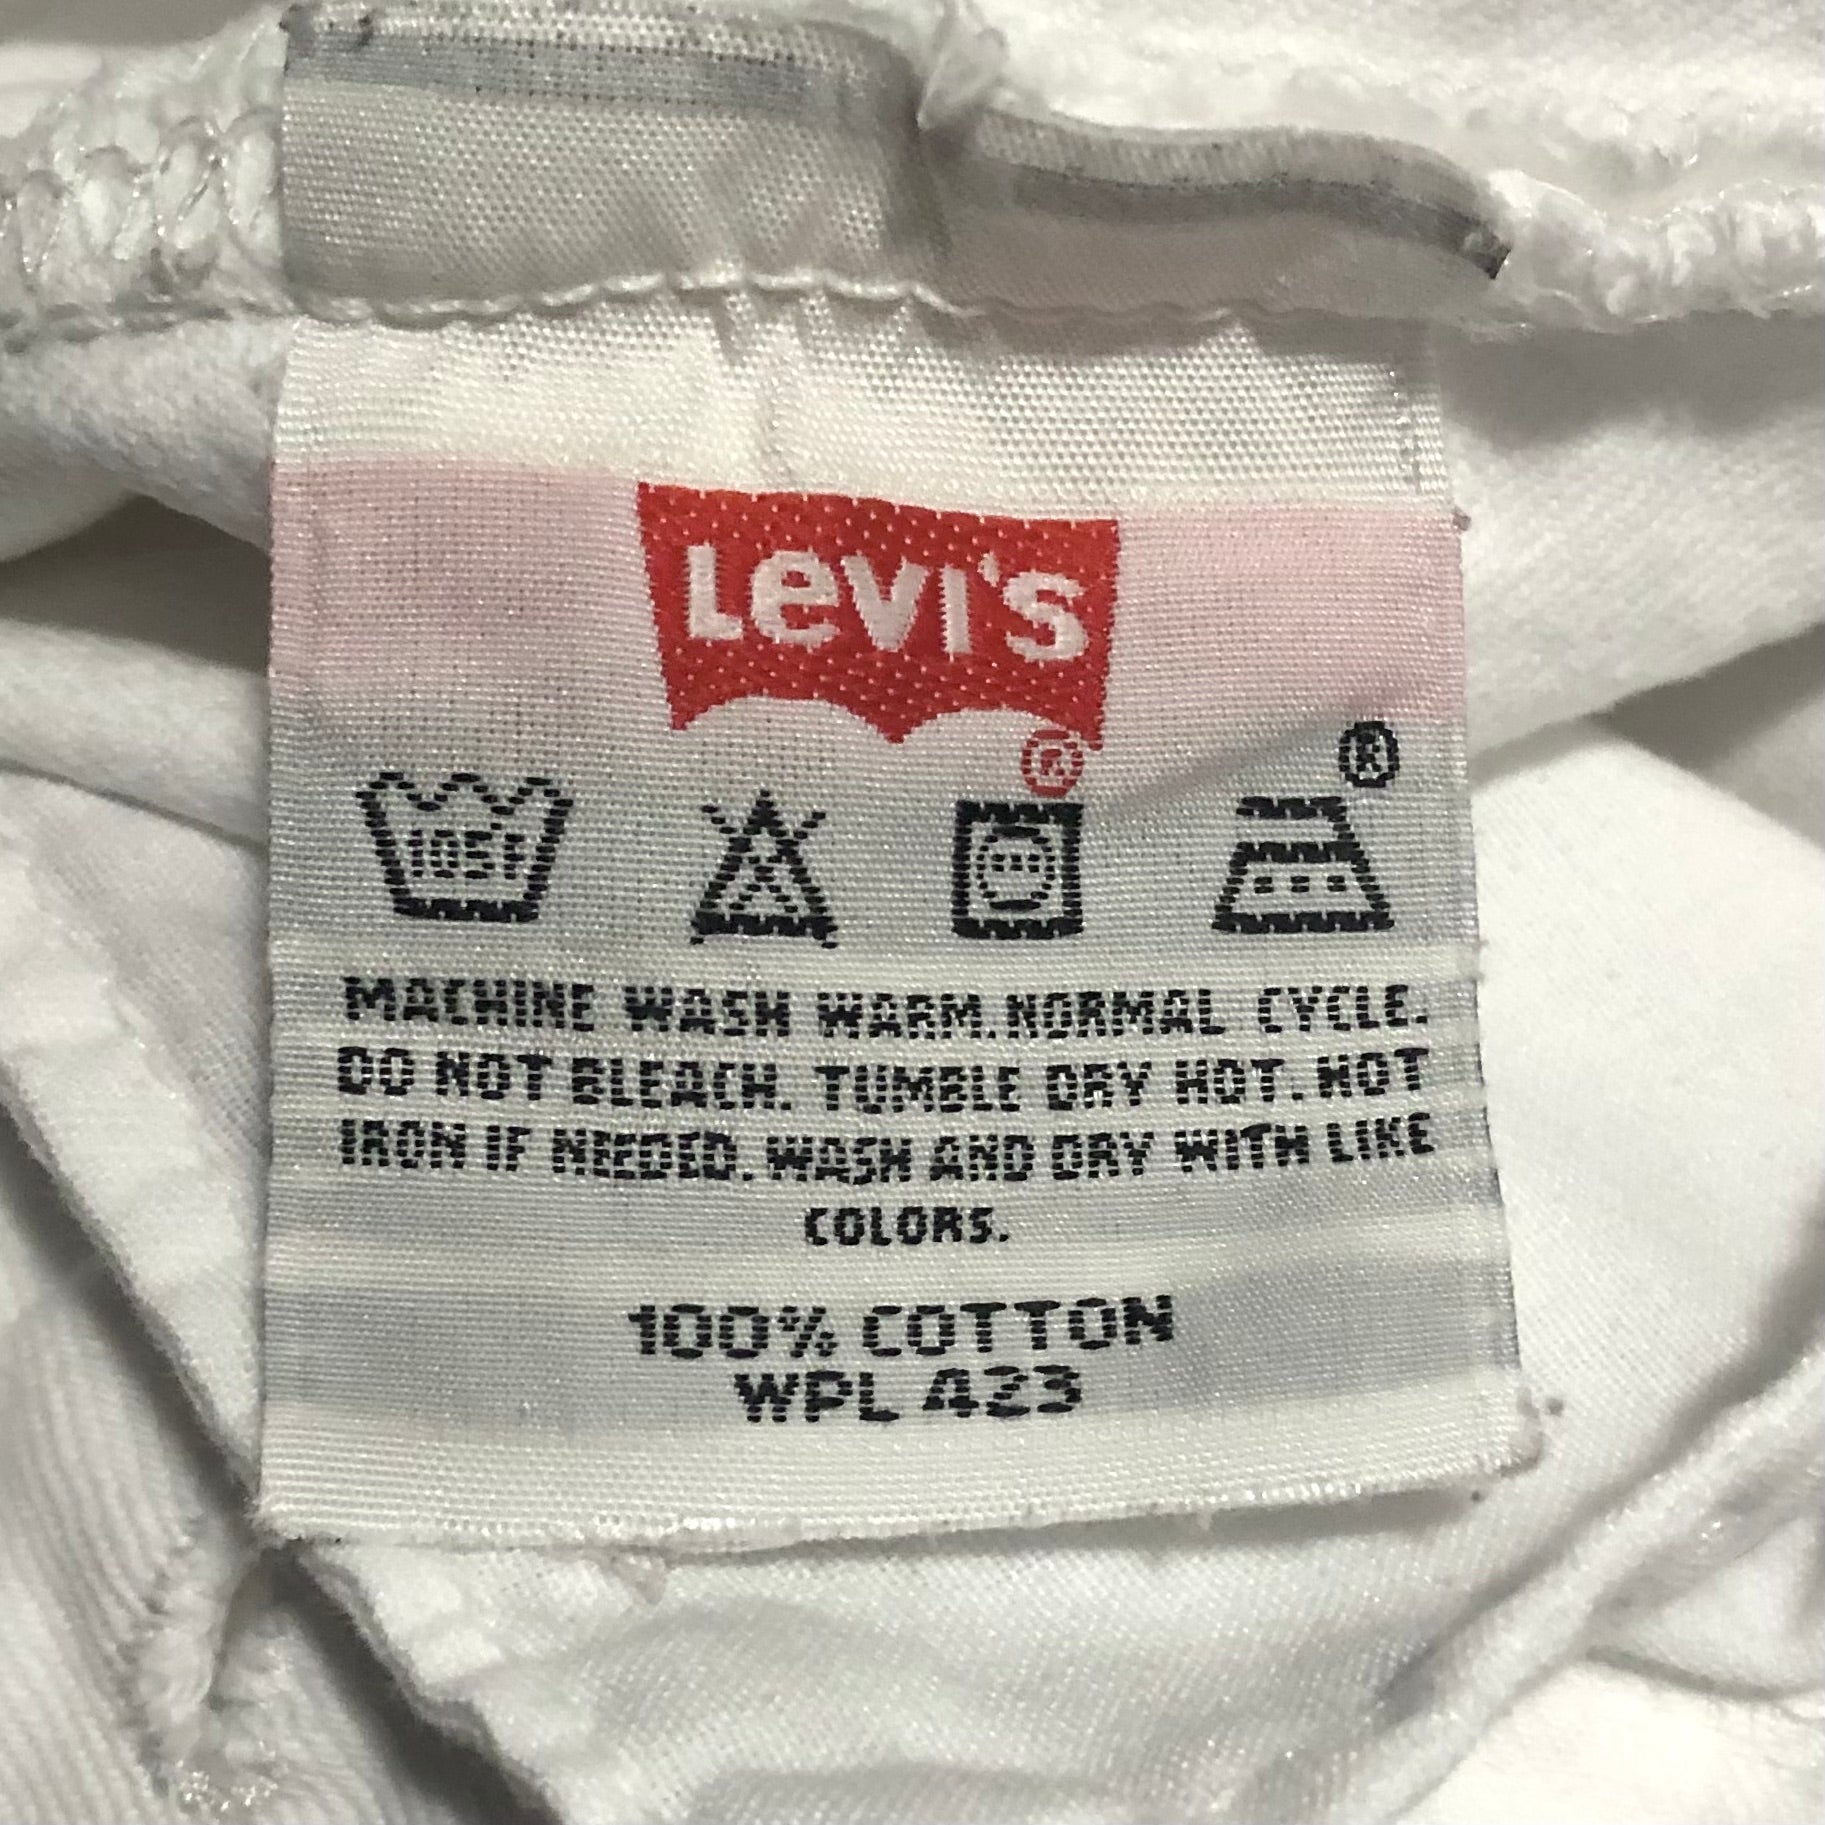 White 501 Levi's Jeans 